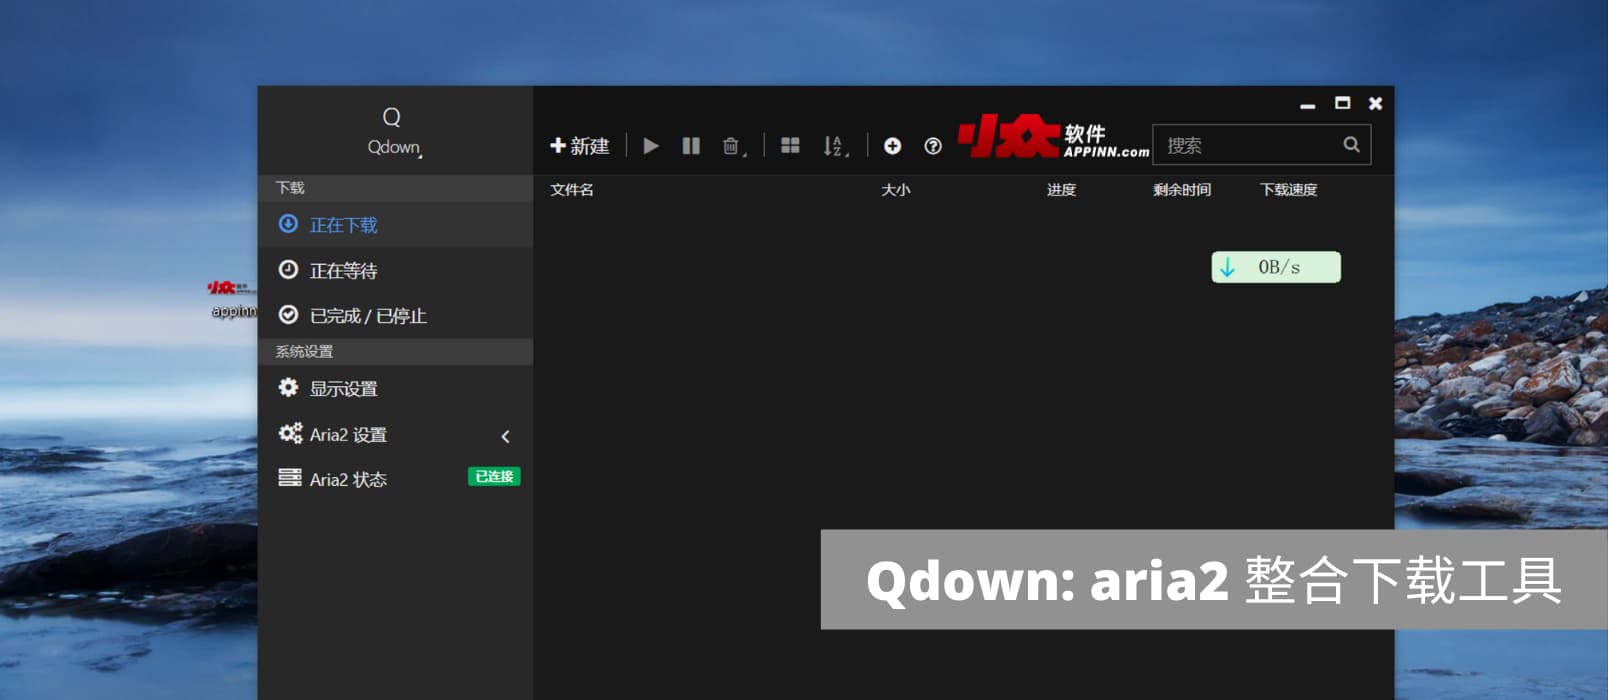 Qdown - 支持迅雷链接的 aria2 下载工具[Windows]